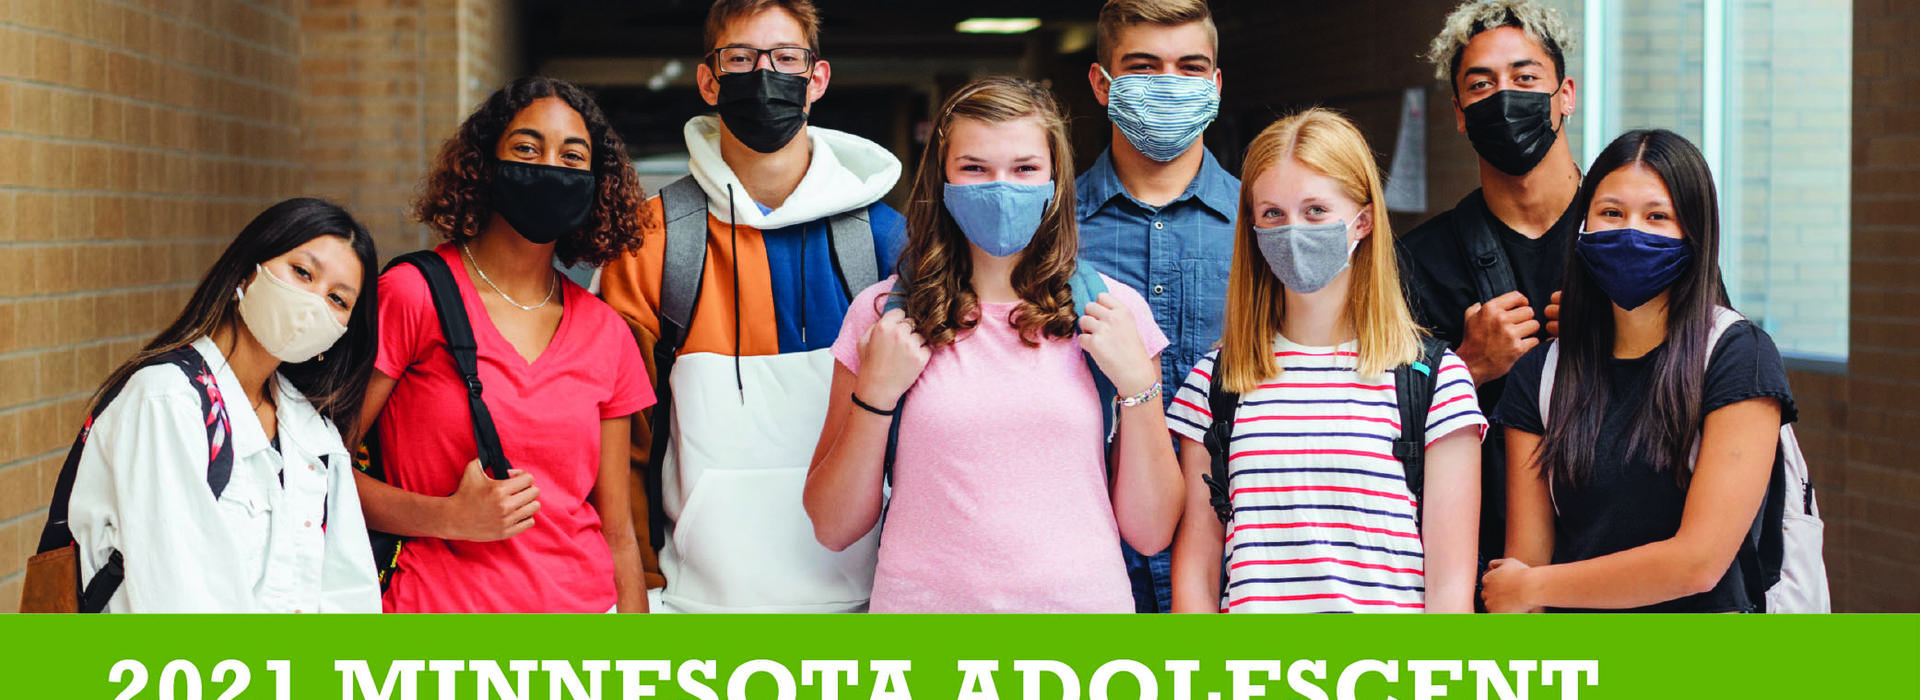 Teenager standing in a school hallway wearing masks